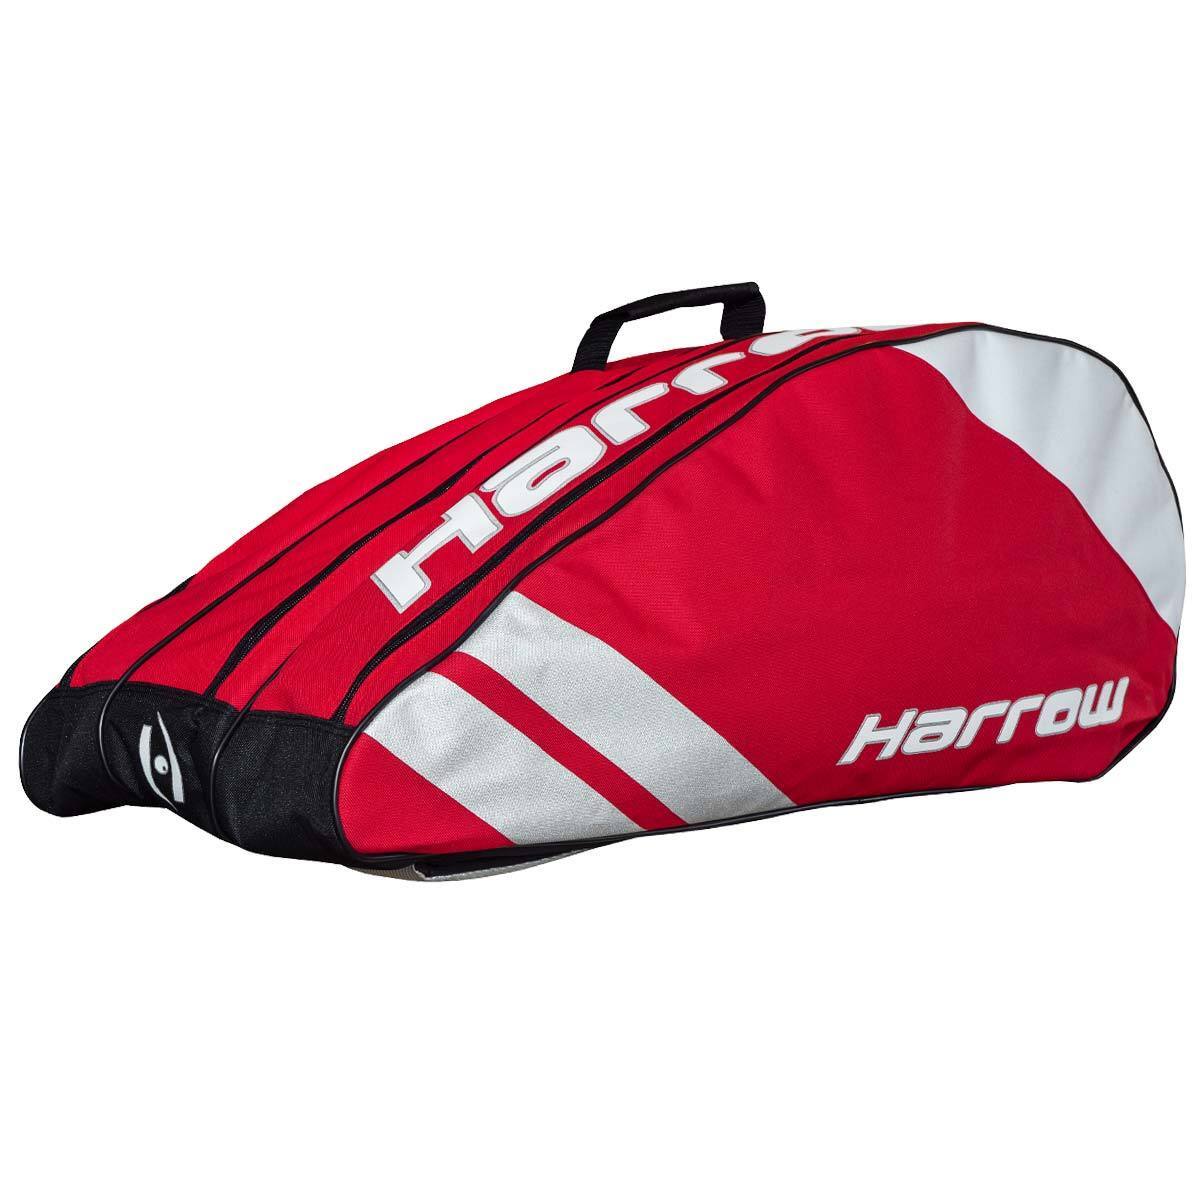 Harrow Ace Pro 6 Racquet Squash Bag